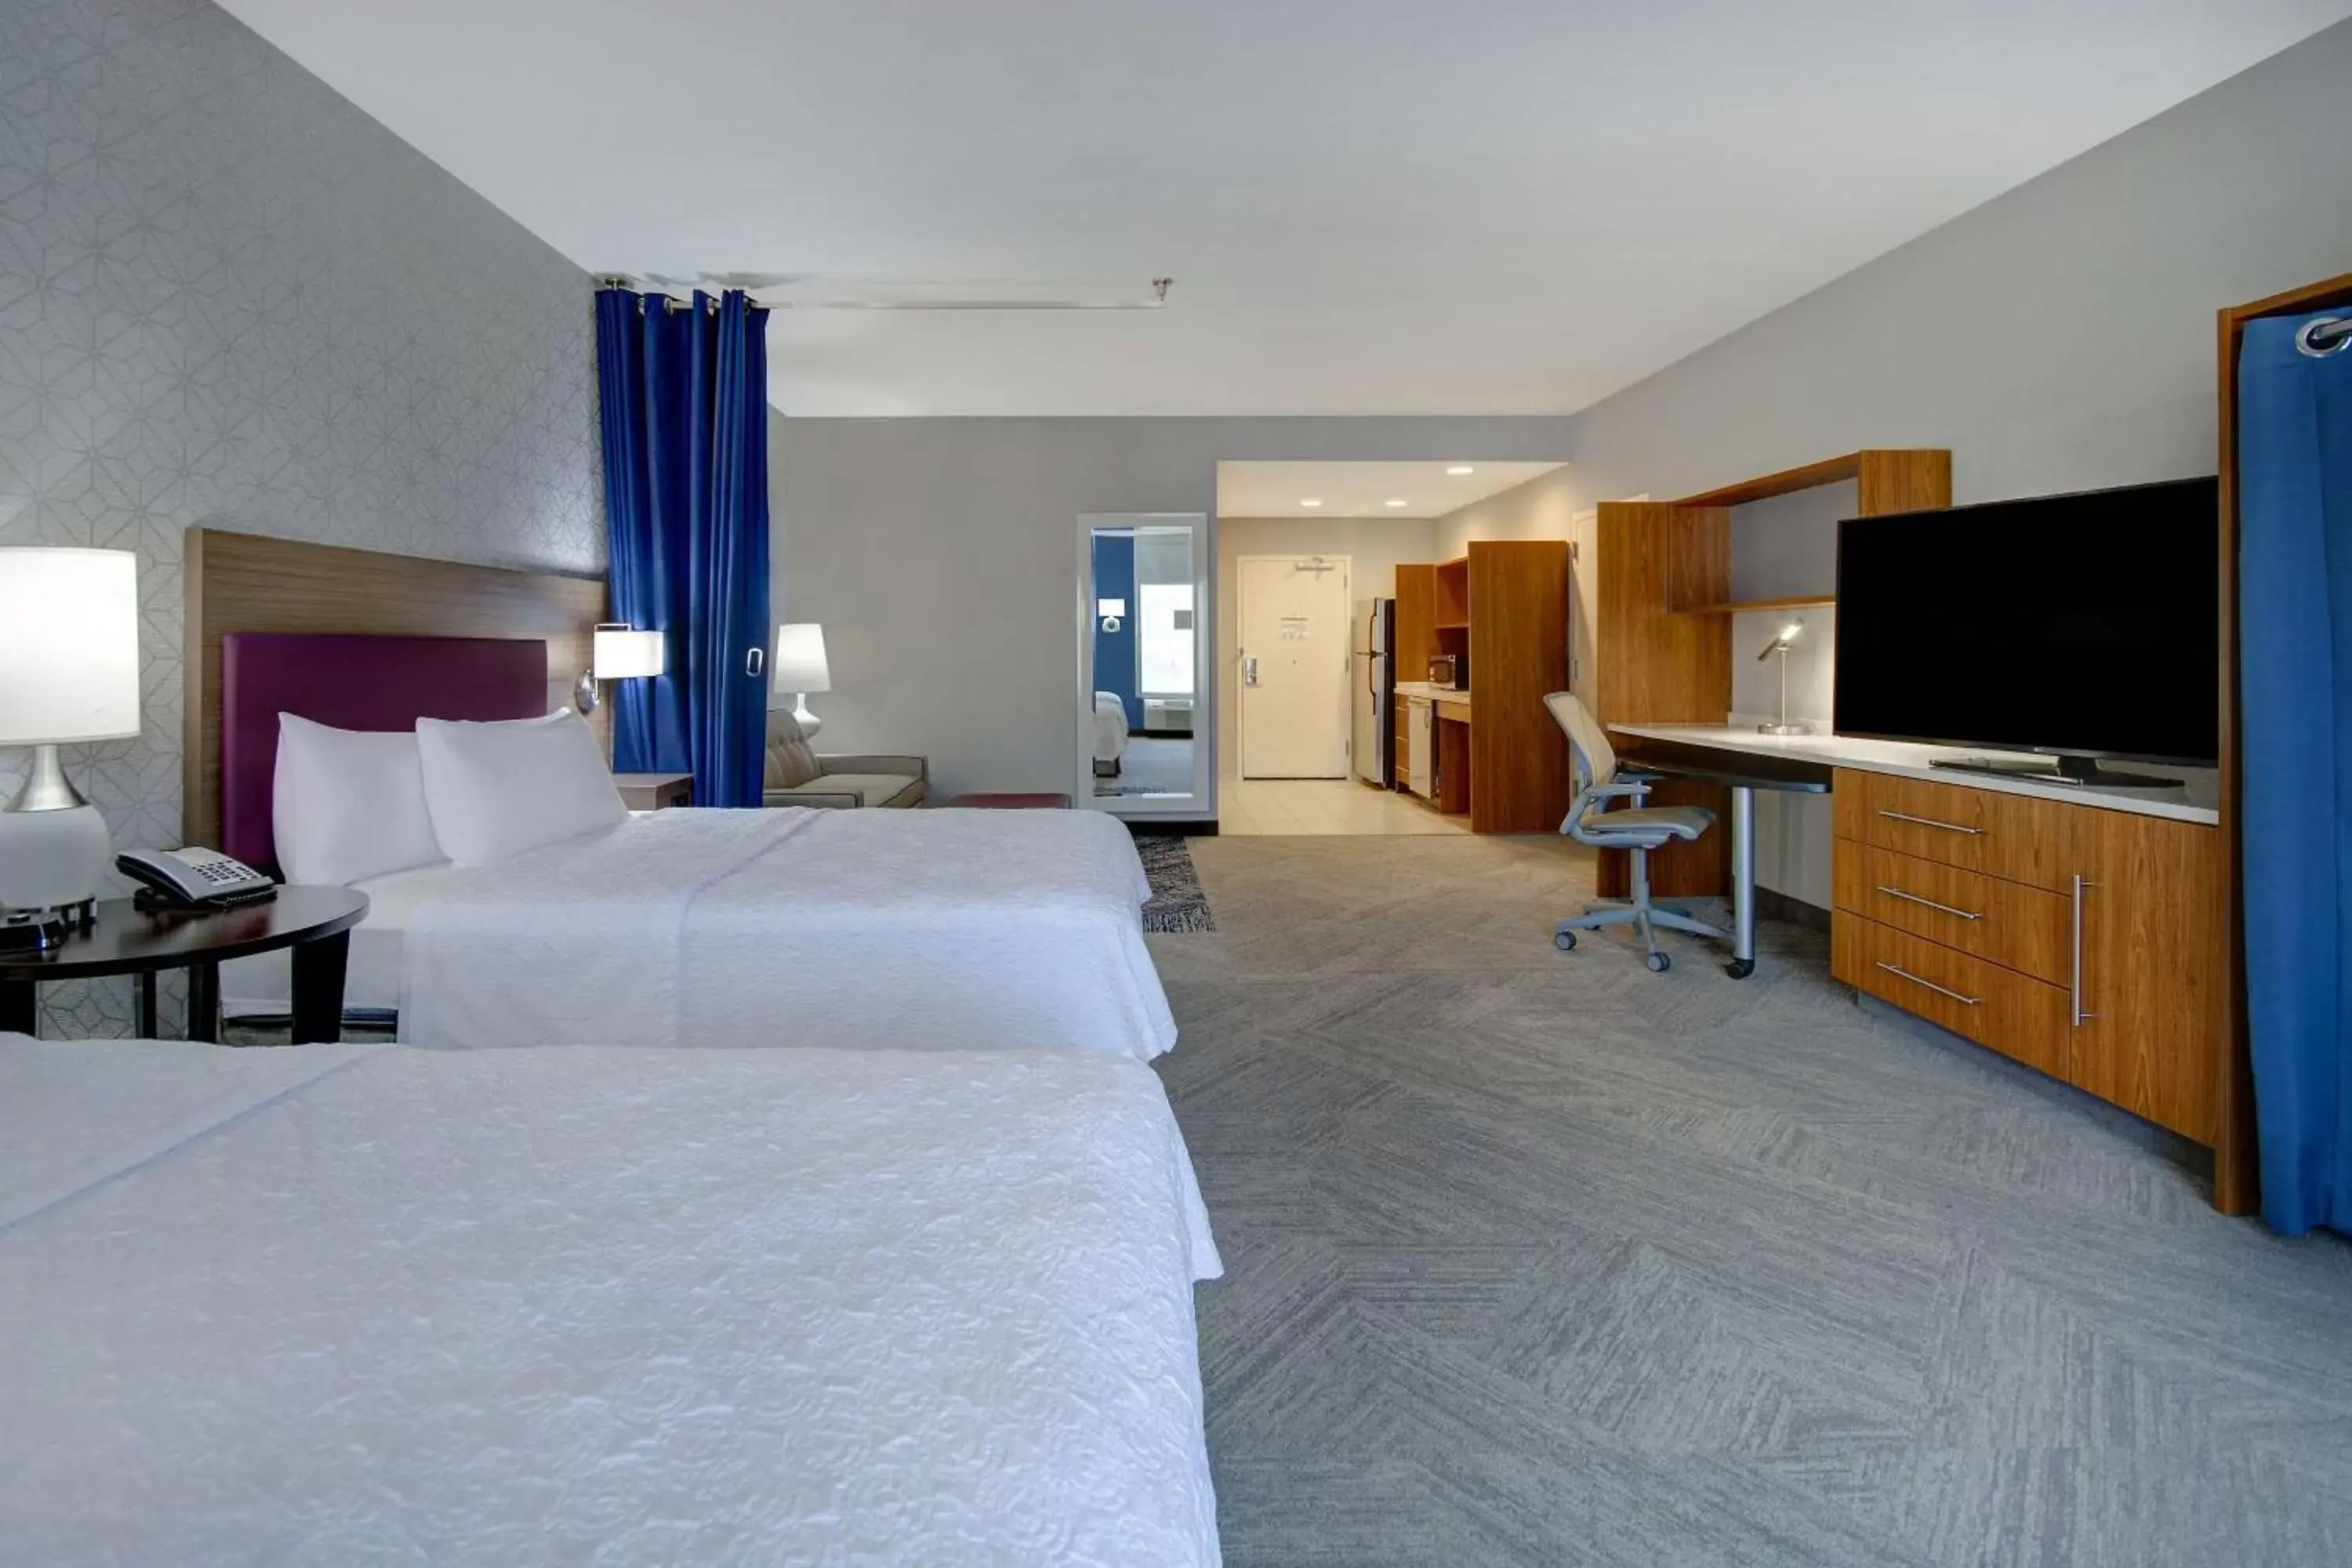 Bedroom, TV/Entertainment Center in Home2 Suites Dallas-Frisco